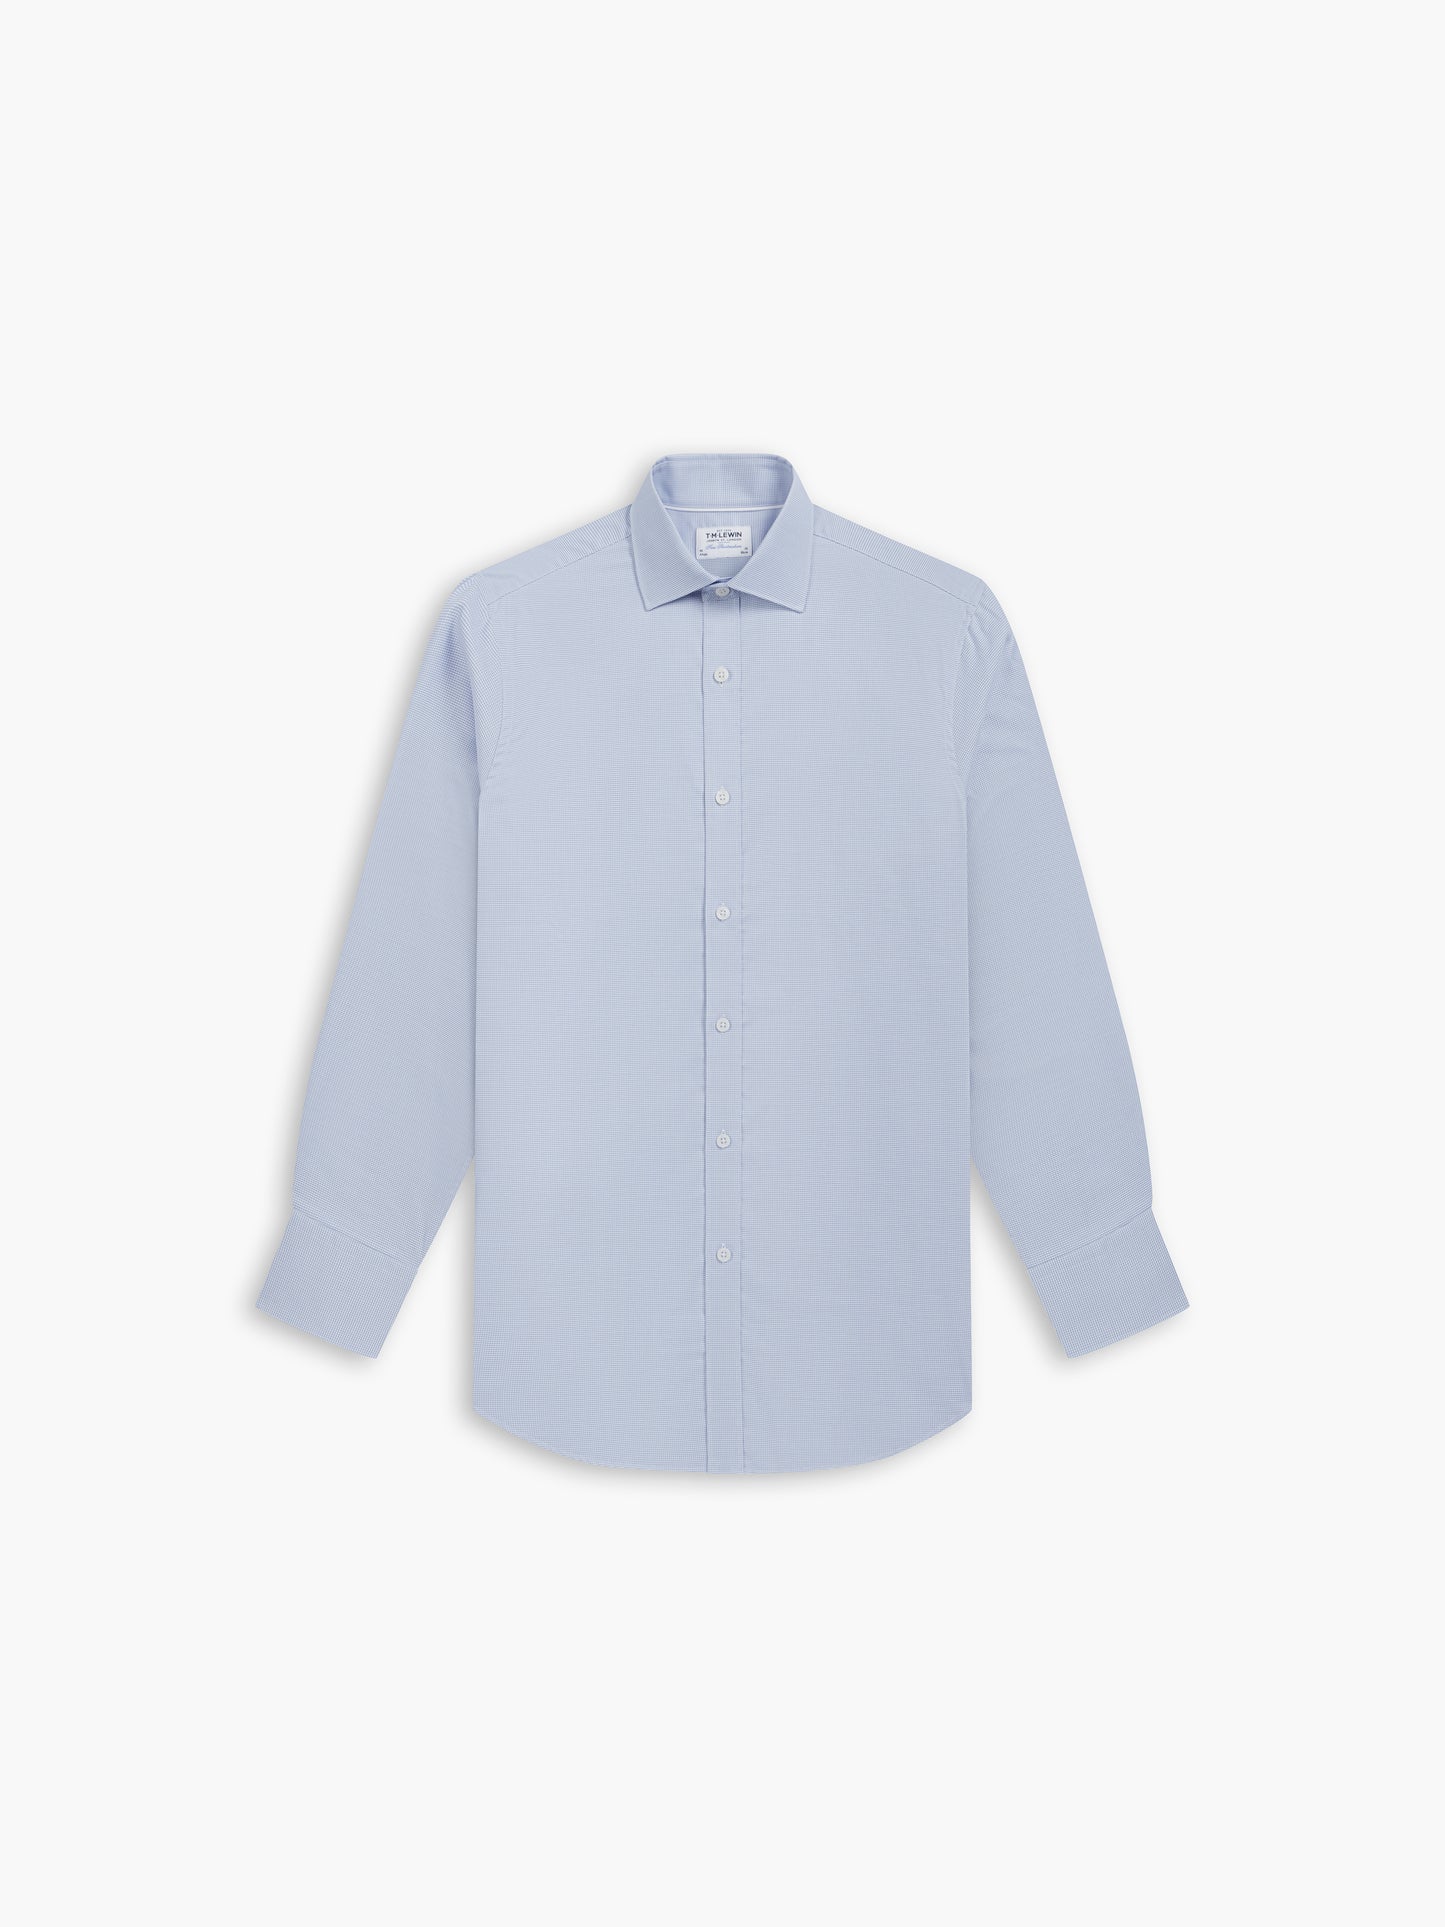 Blue Horizontal Mini Stripe Oxford Fitted Single Cuff Classic Collar Shirt